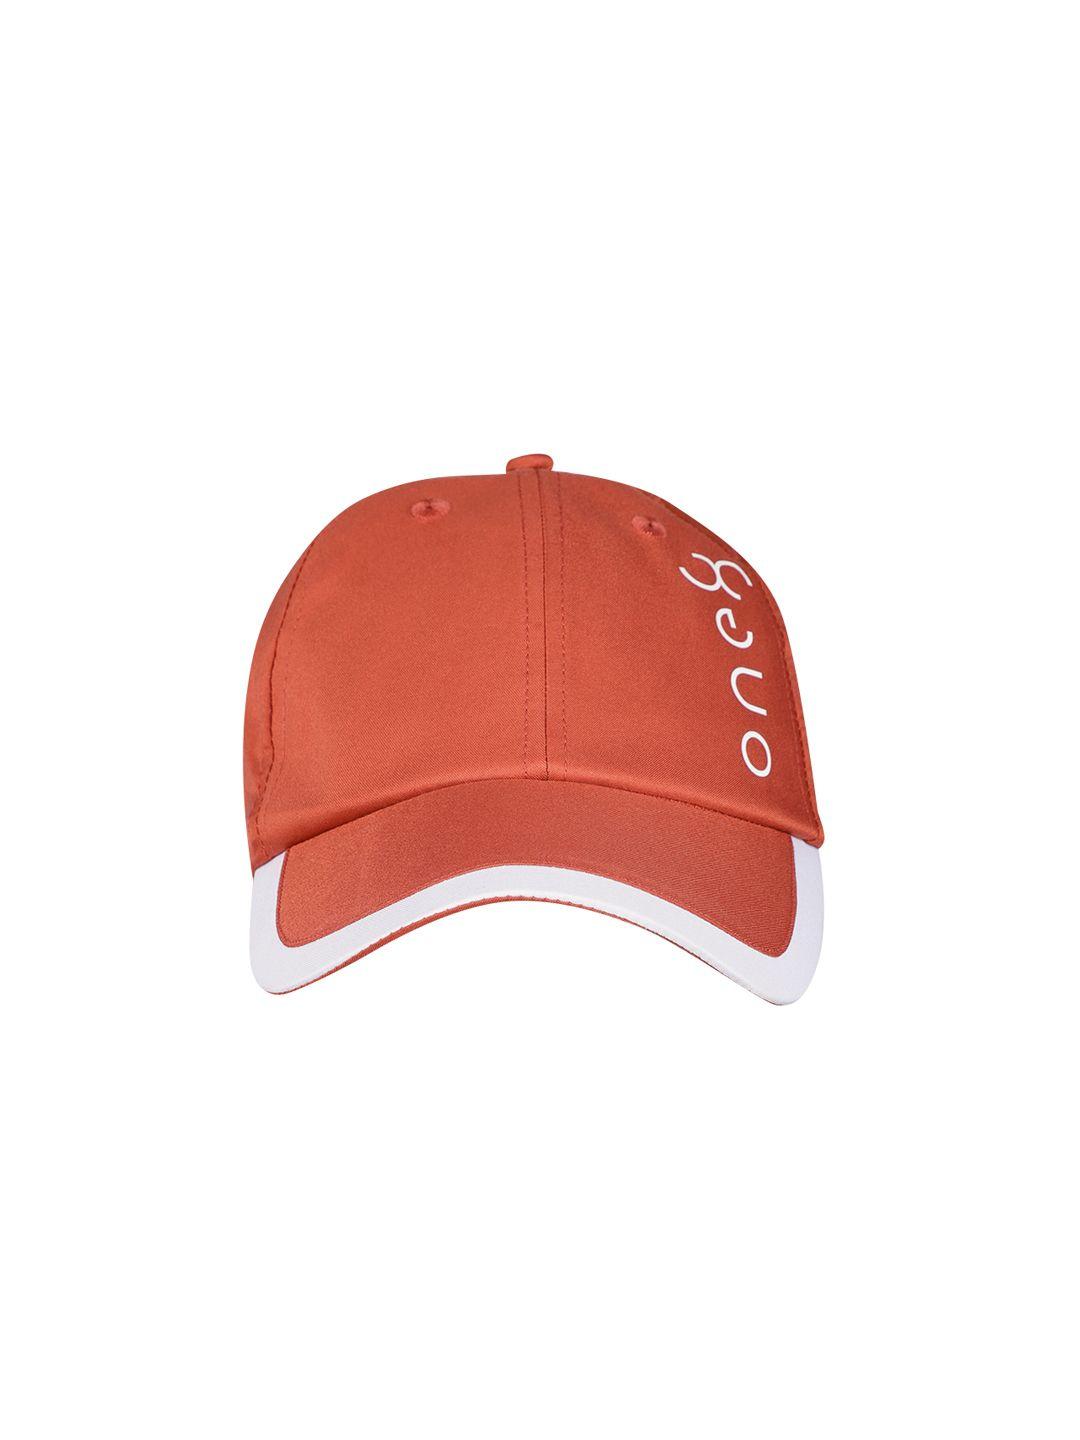 one8 x puma unisex red brand logo printed snapback cap